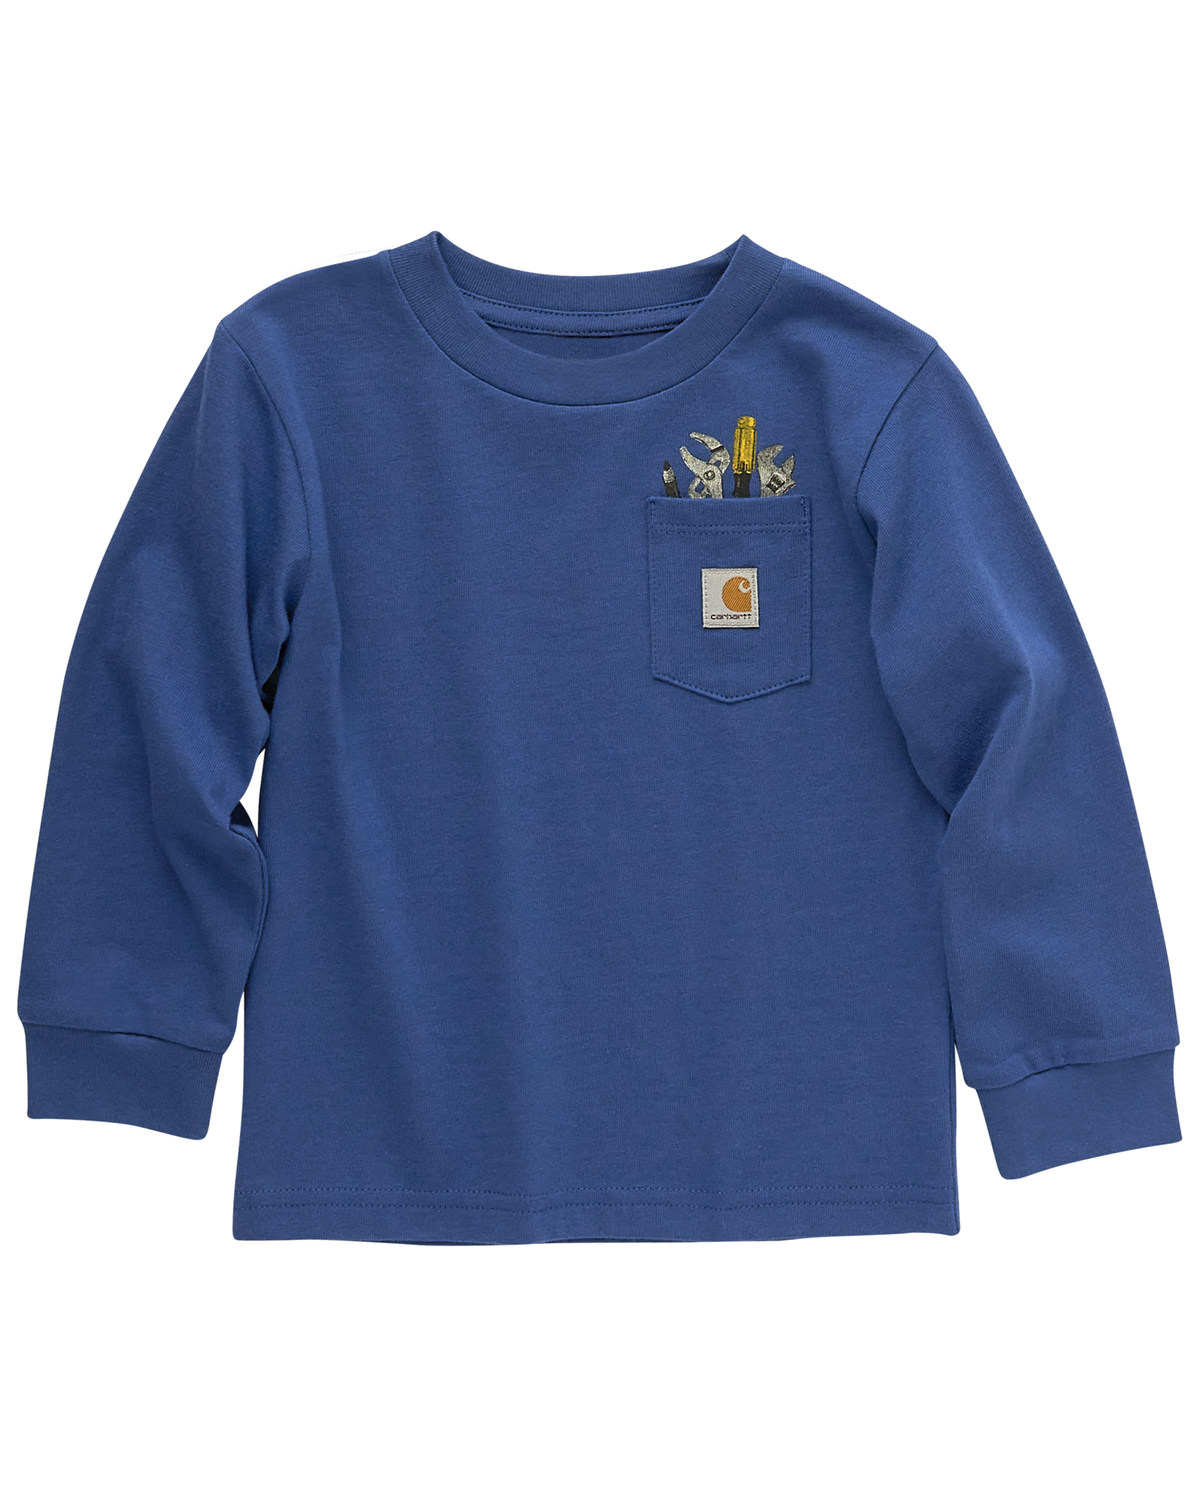 Carhartt Toddler Boys' Pocket Long Sleeve T-Shirt